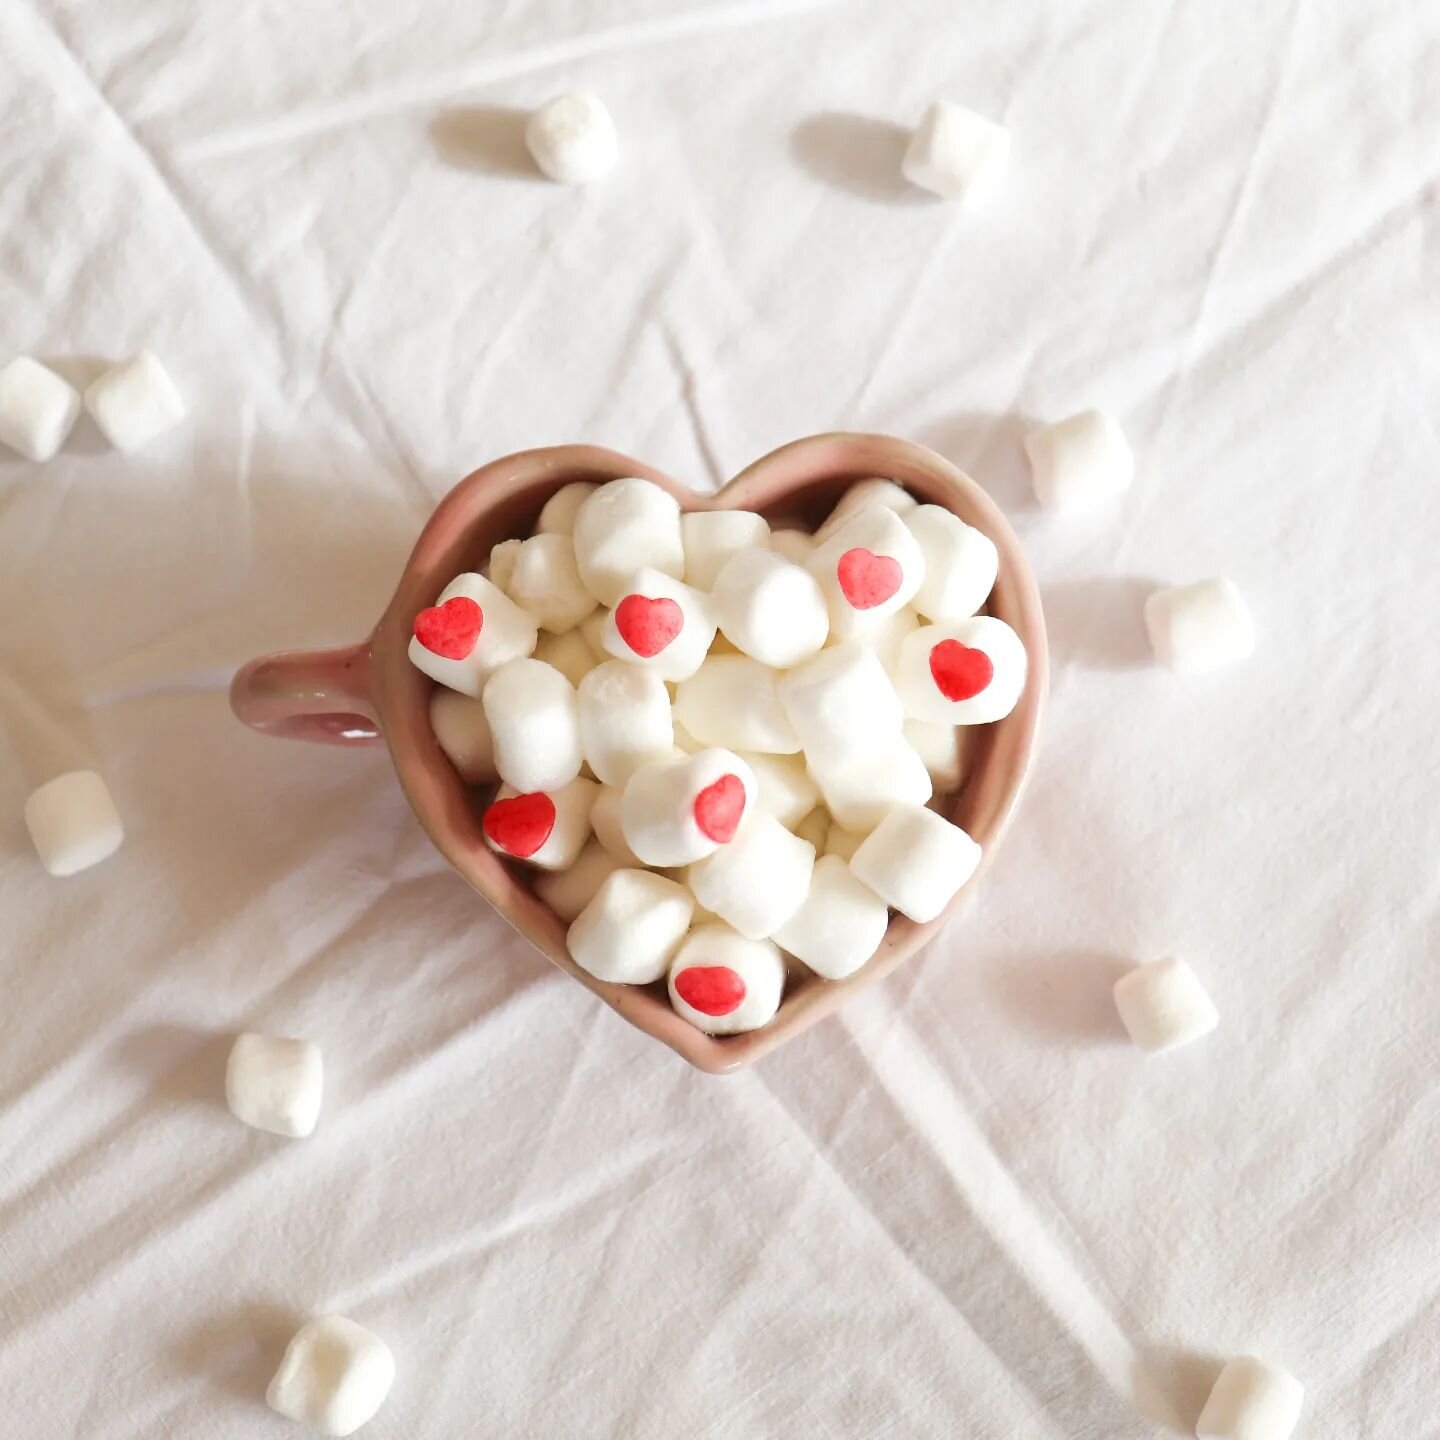 Pink mug and marshmallows 💕

#poppyceramics #marshmallow #pinkheart #heartmug #frenchceramic #frenchceramist #handmadeinfrance #whitelinen #artisanatfrancais #romantic #girlyceramics